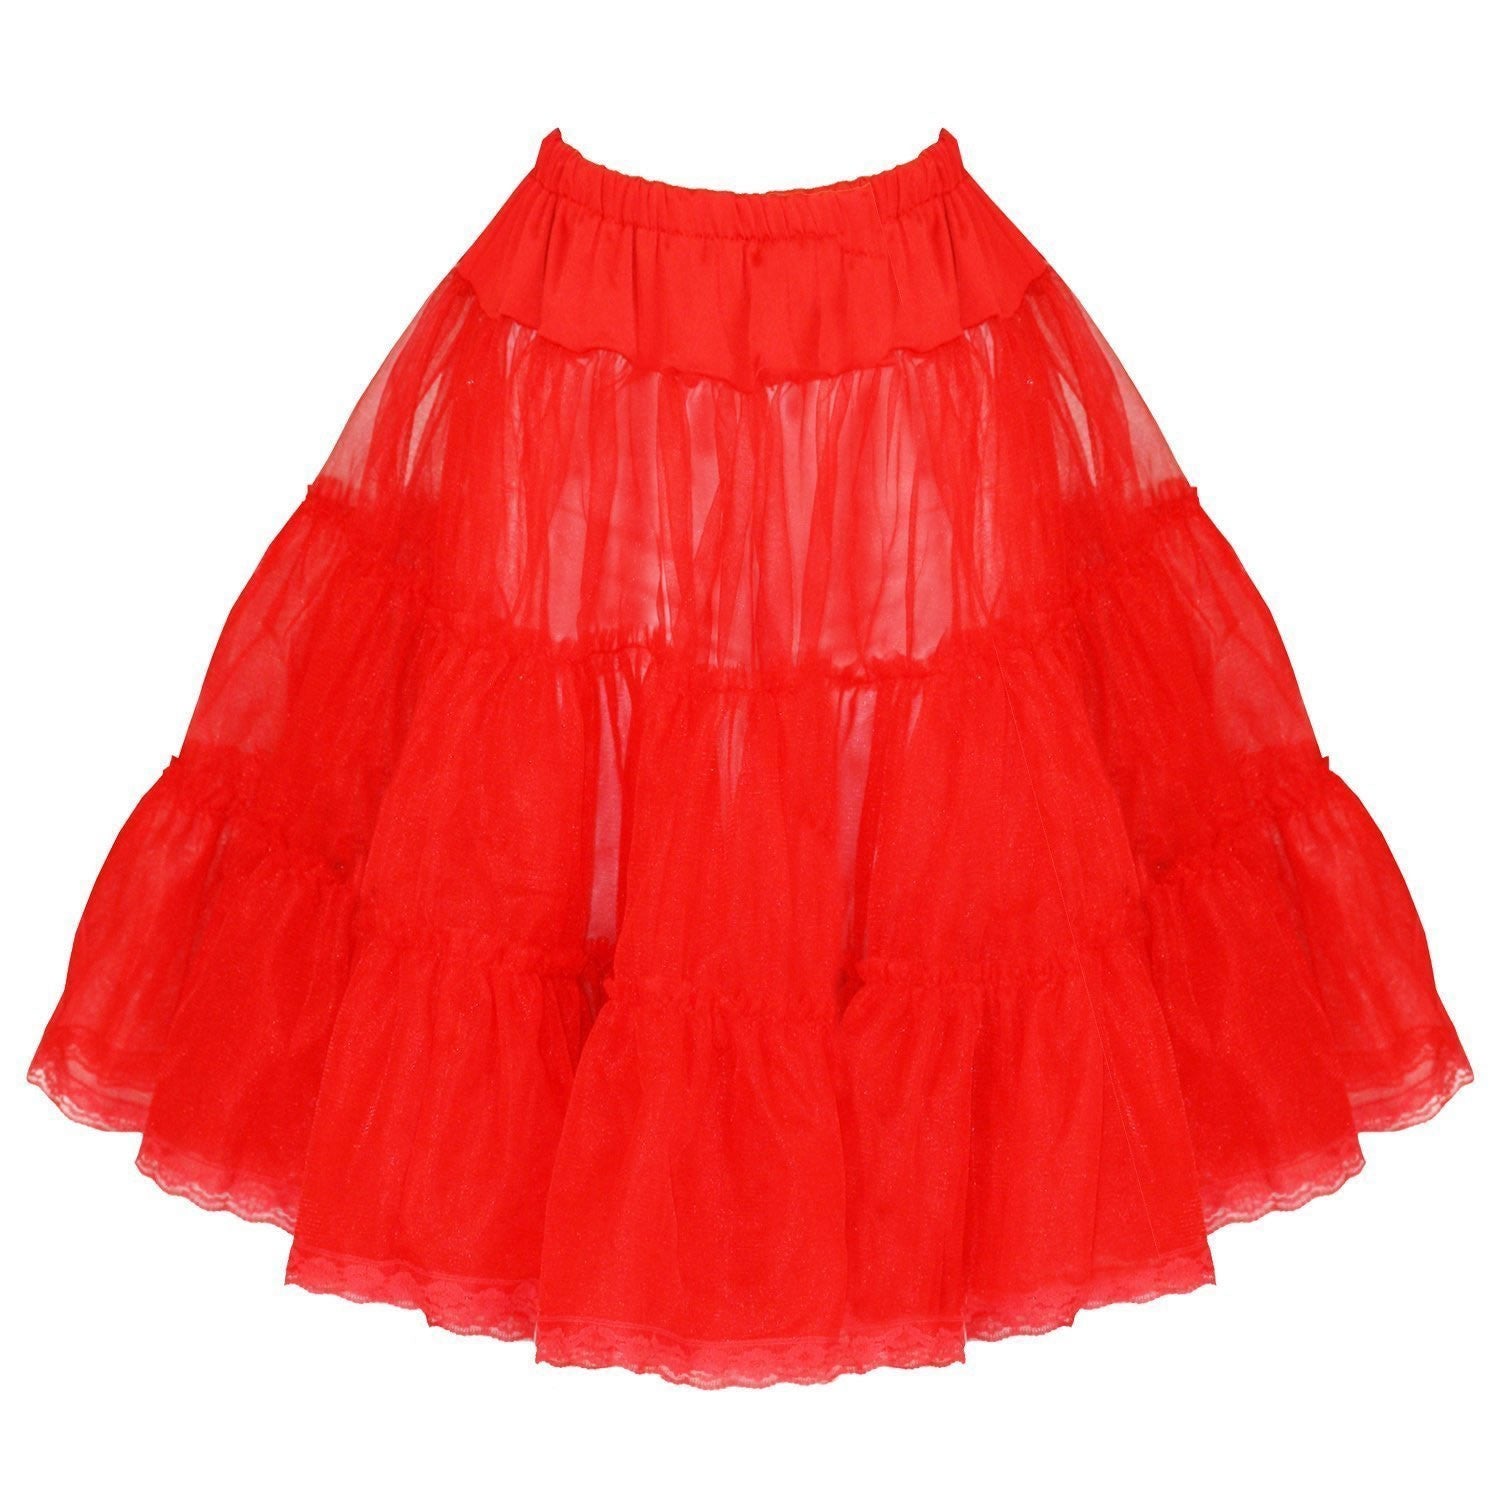 Red Net Vintage Rockabilly 50s Petticoat Skirt - Pretty Kitty Fashion